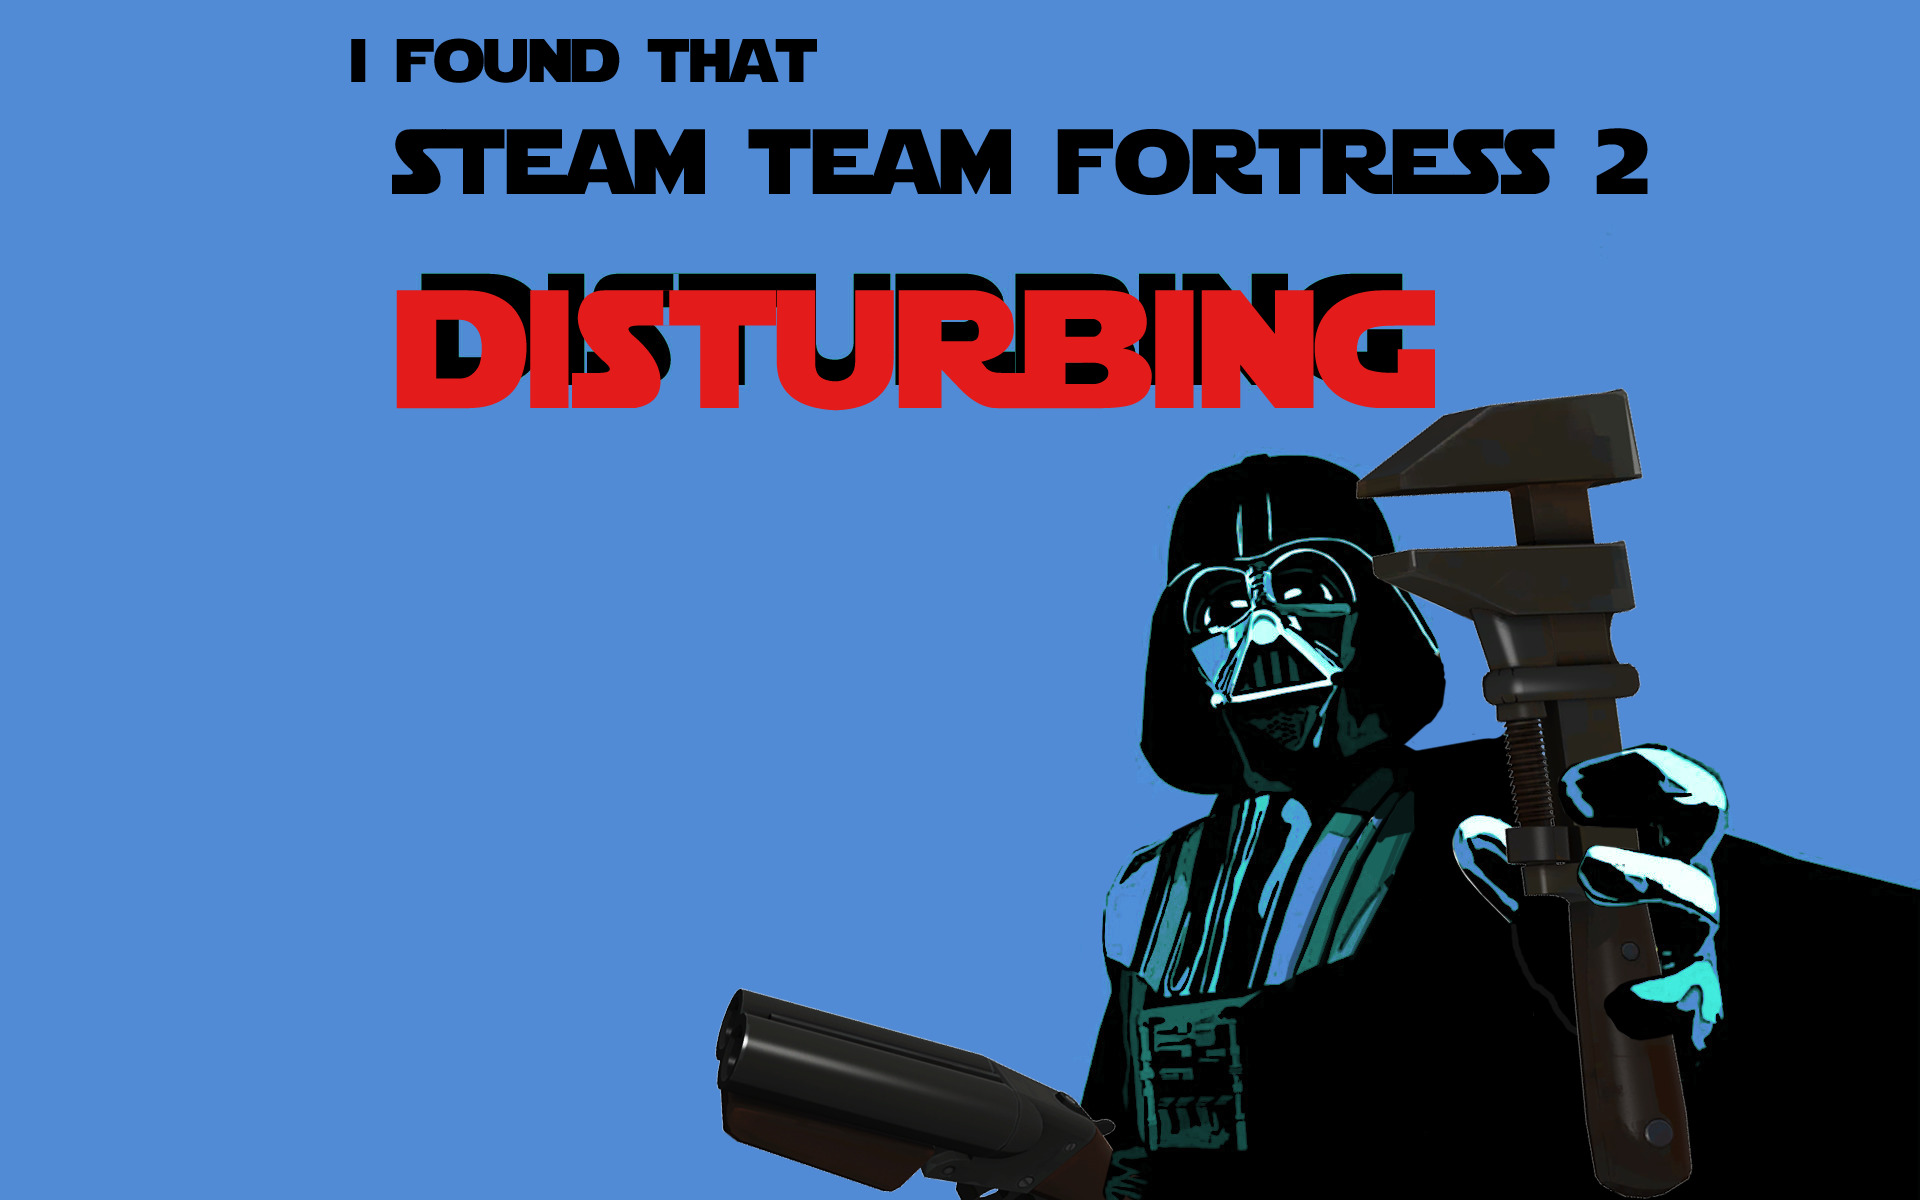 Team Fortress 2, Steam (software), Darth Vader, Humor, Advertisements, Pyro (character), Star Wars Wallpaper